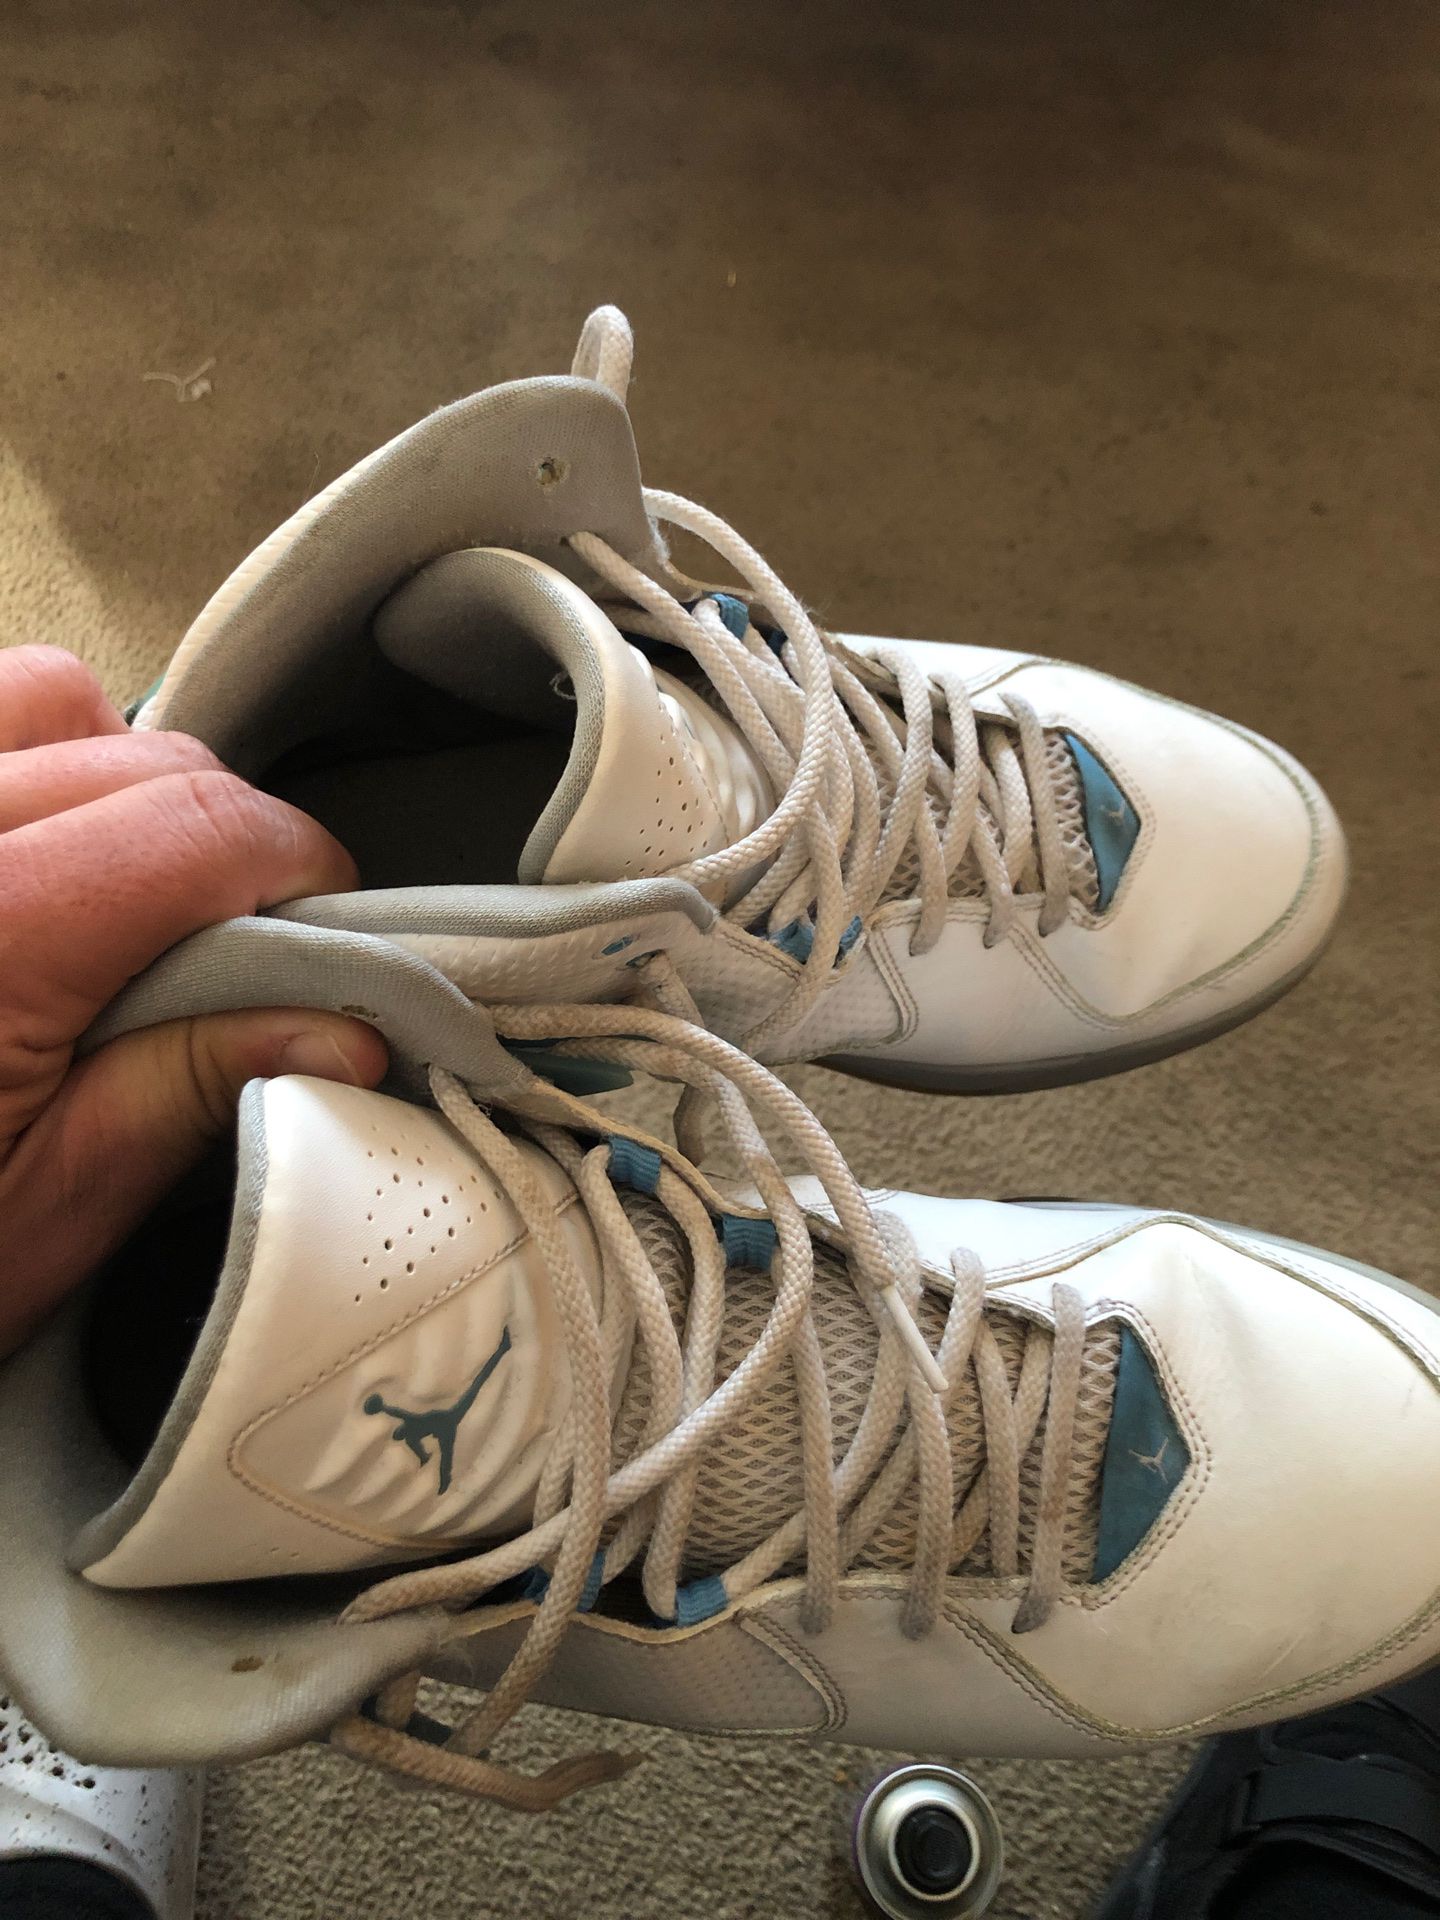 Jordan shoe size 12